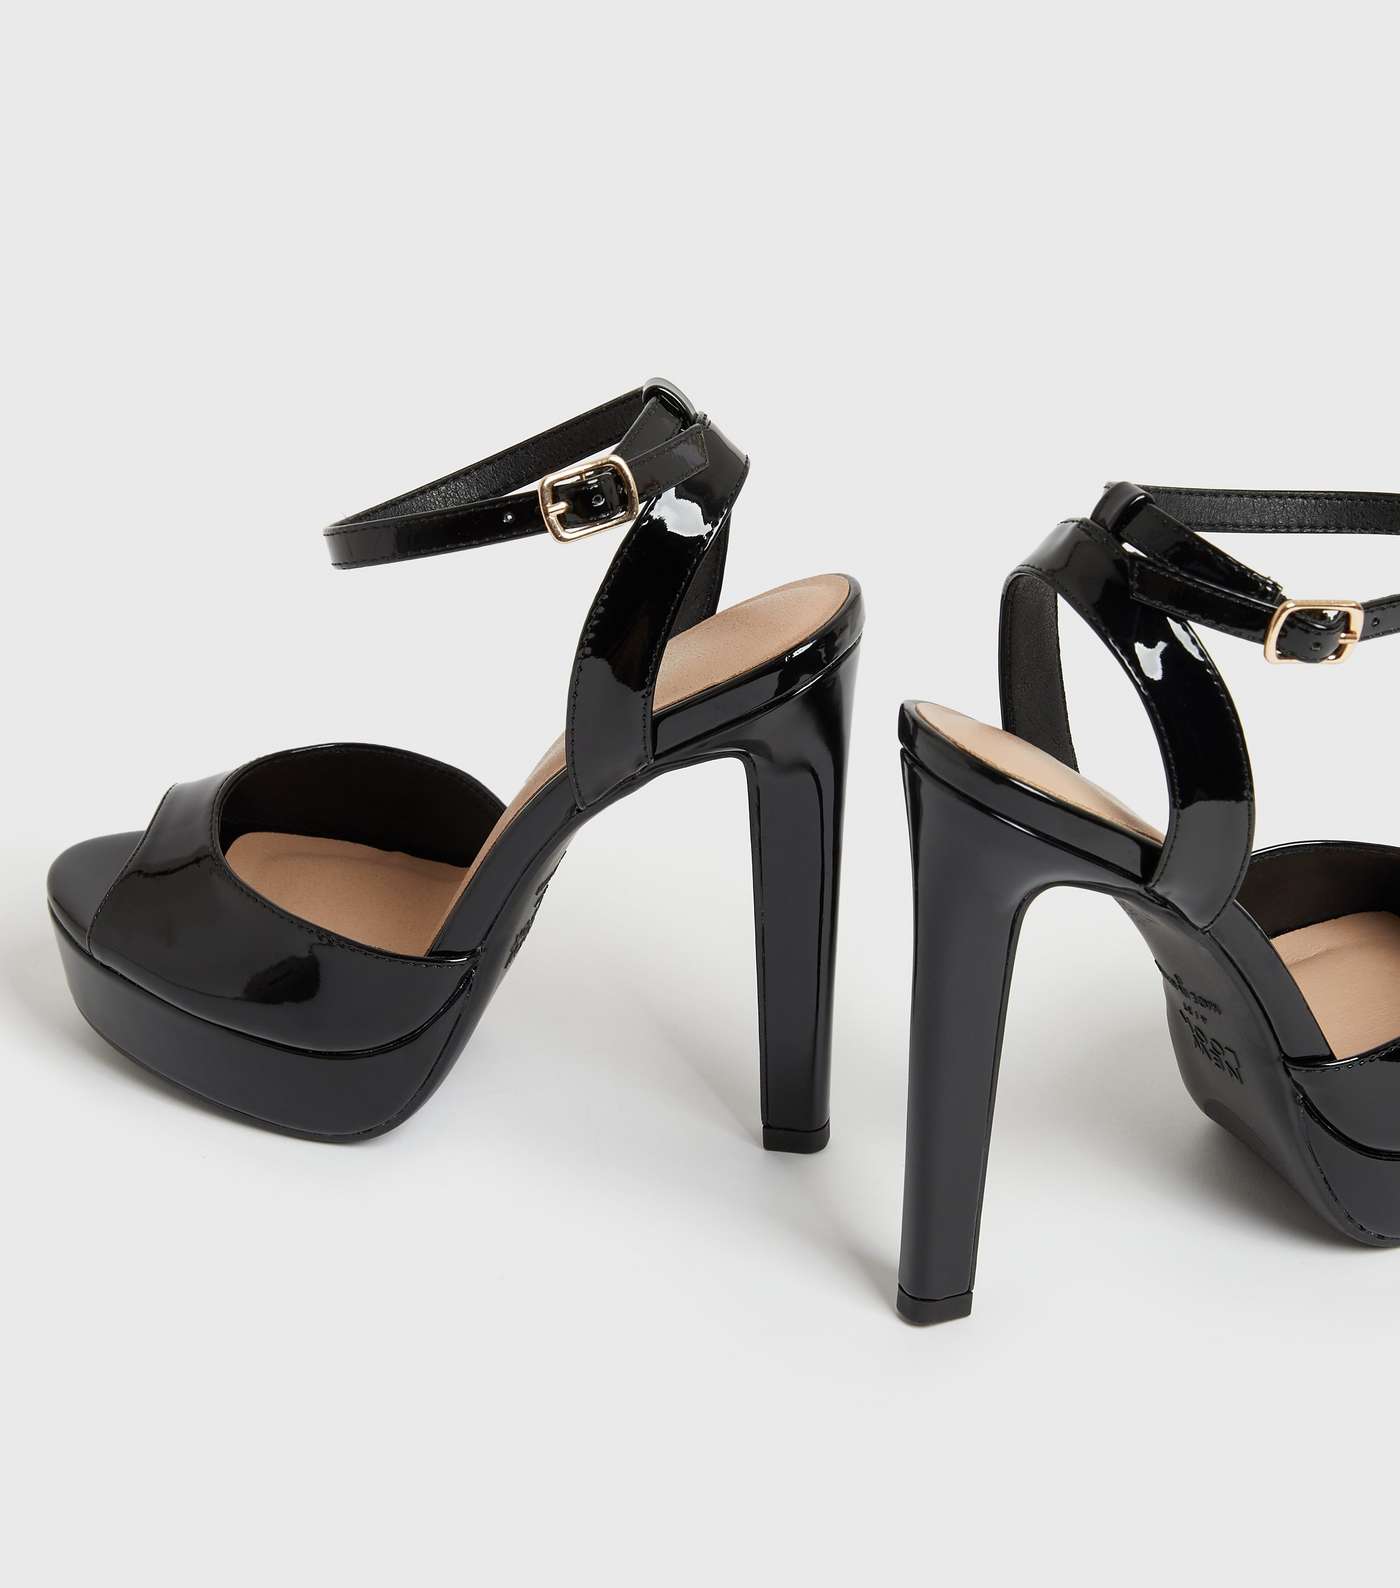 Black Patent 2 Part Stiletto Platform Heel Sandals Image 4